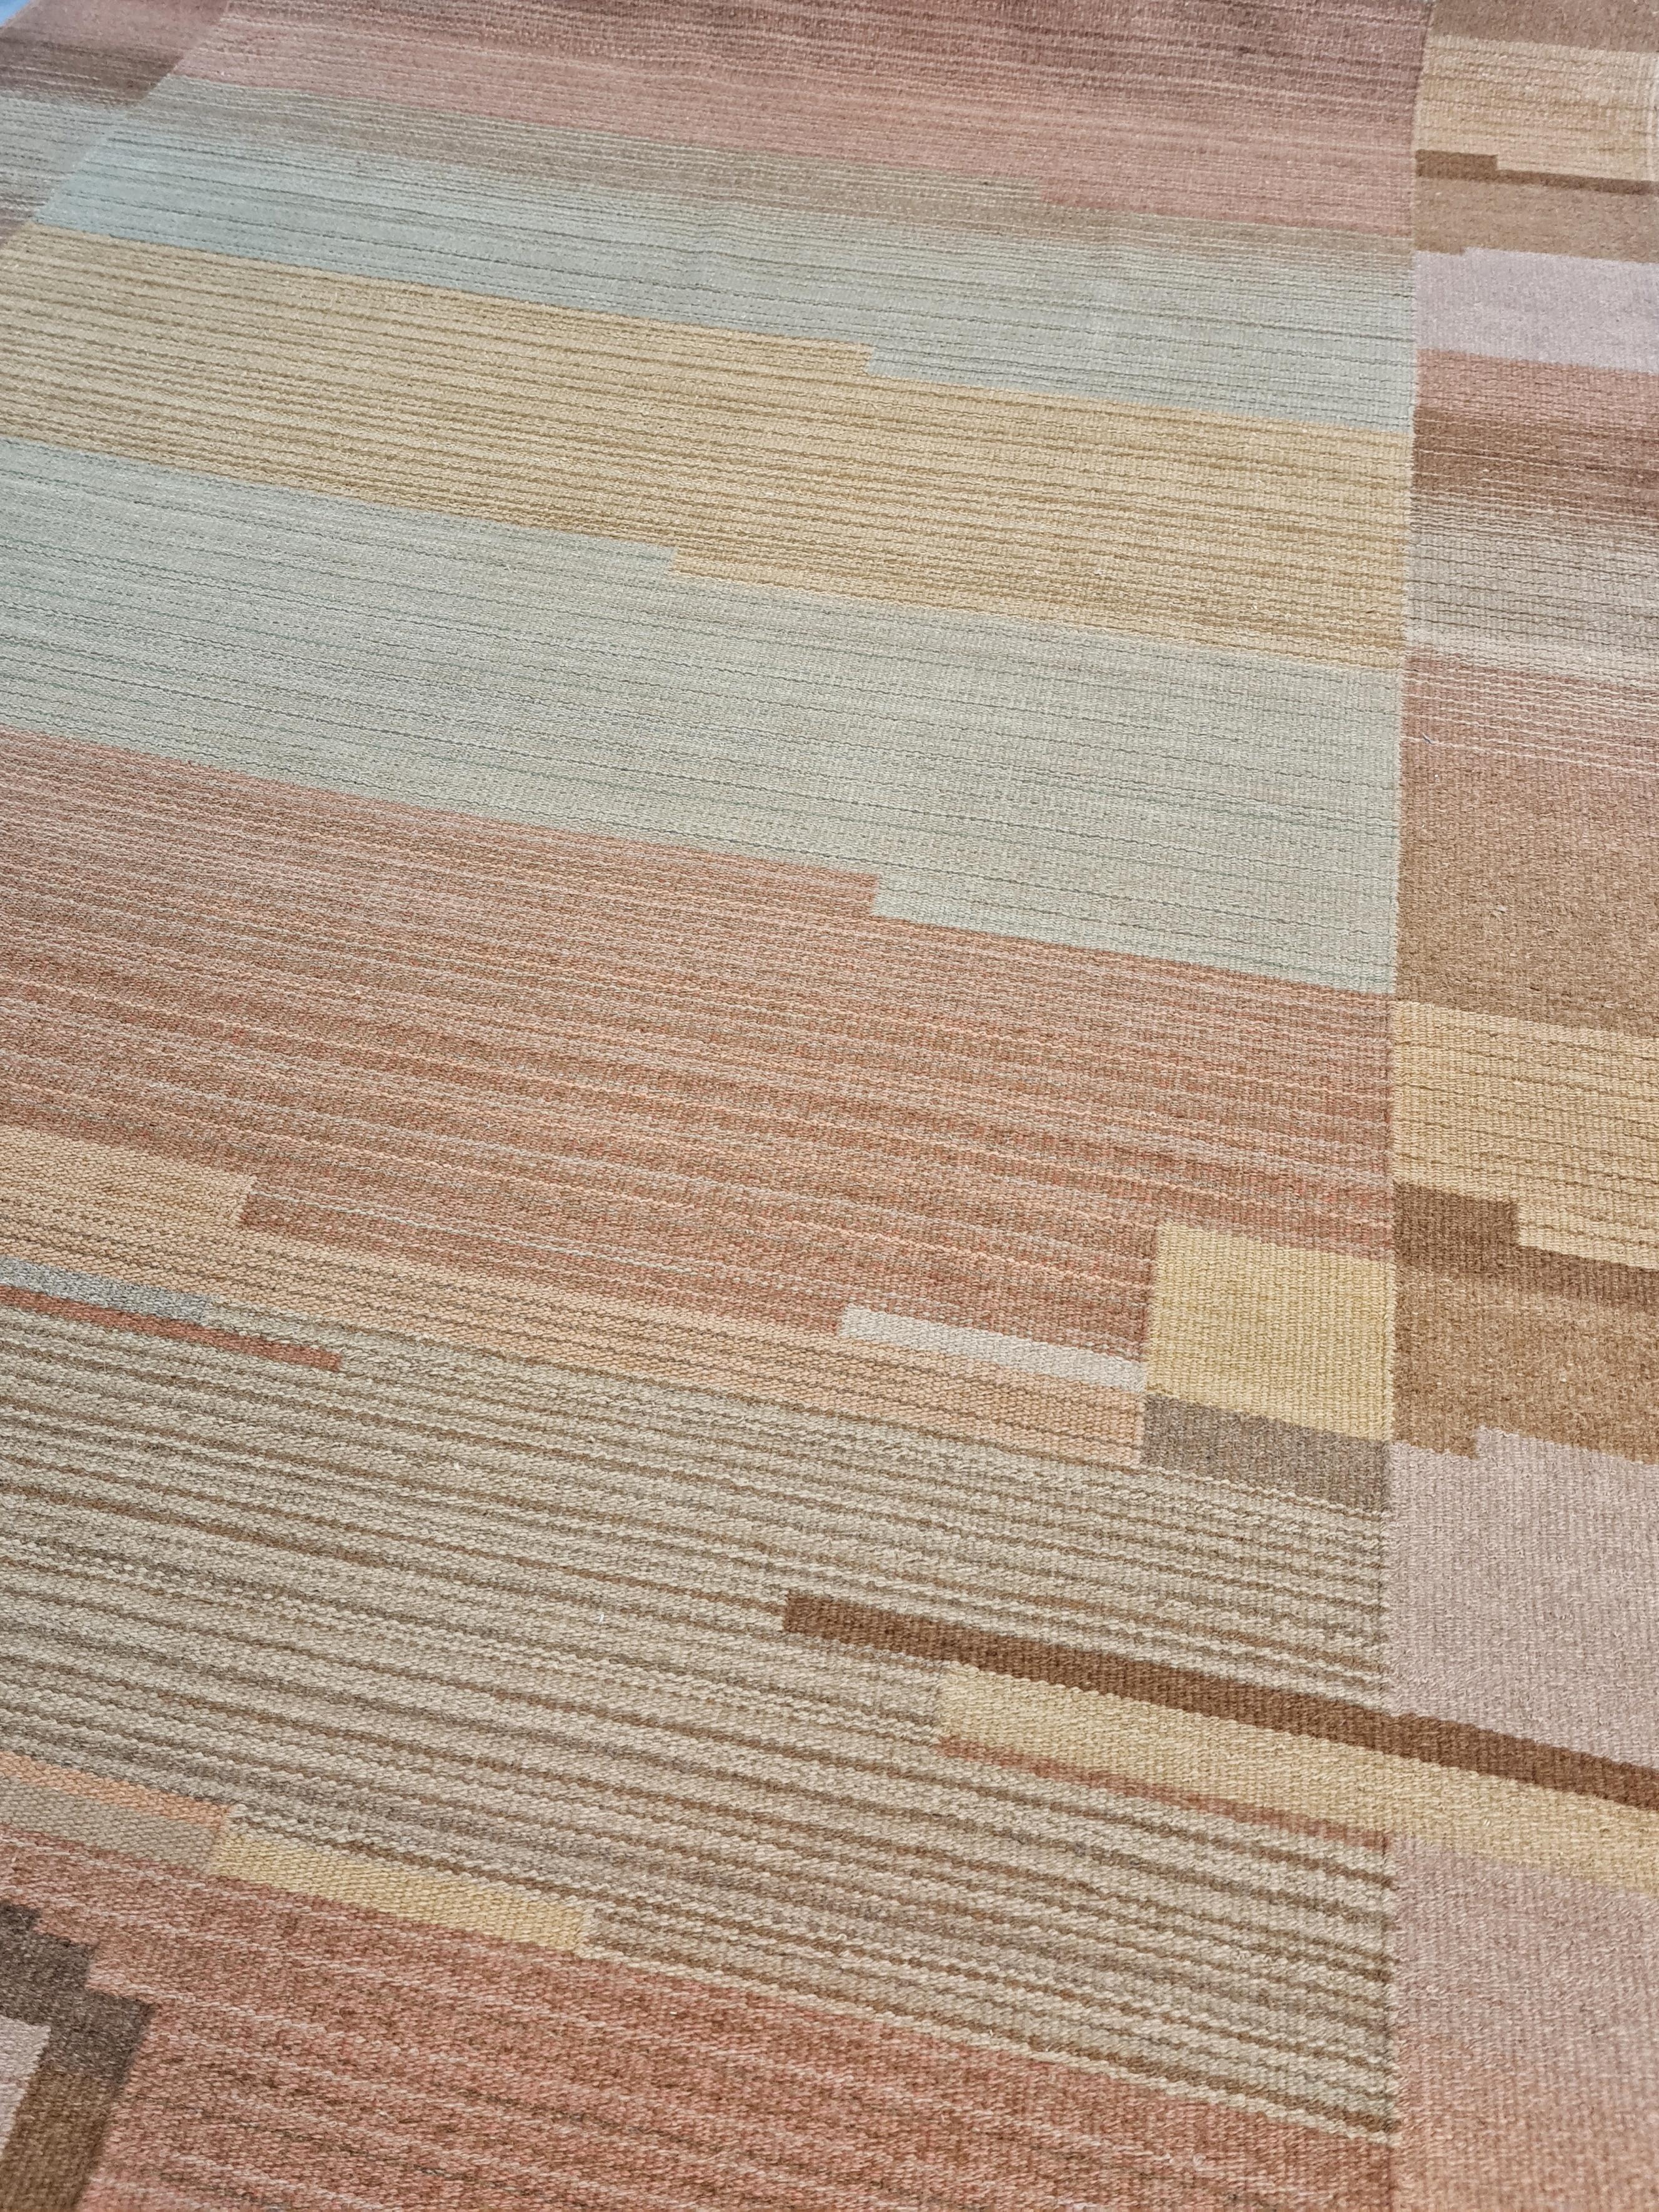 Hand-Woven Greta Skogster-Lehtinen, Finnish Flat-Weave Carpet For Sale